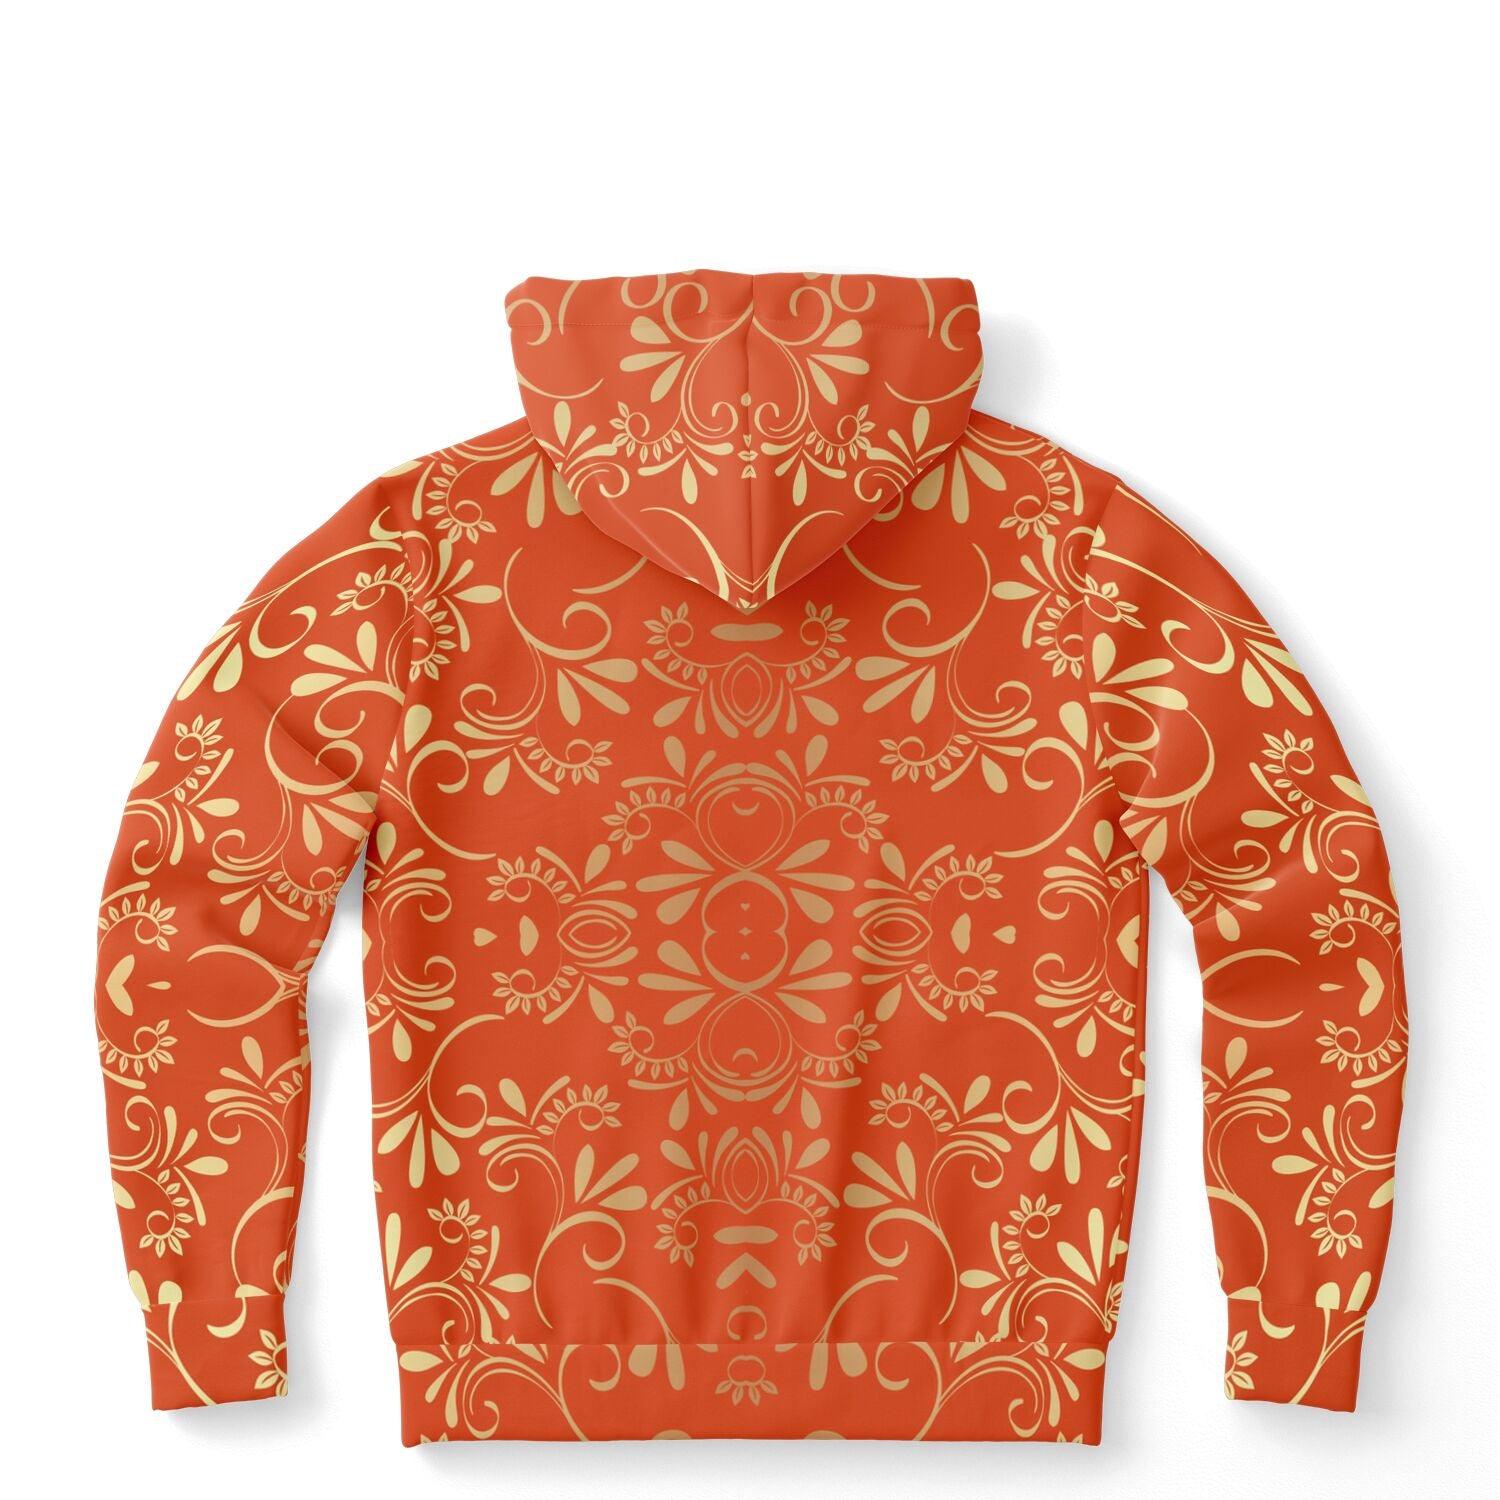 Orangeade hoodie with Victorian pattern